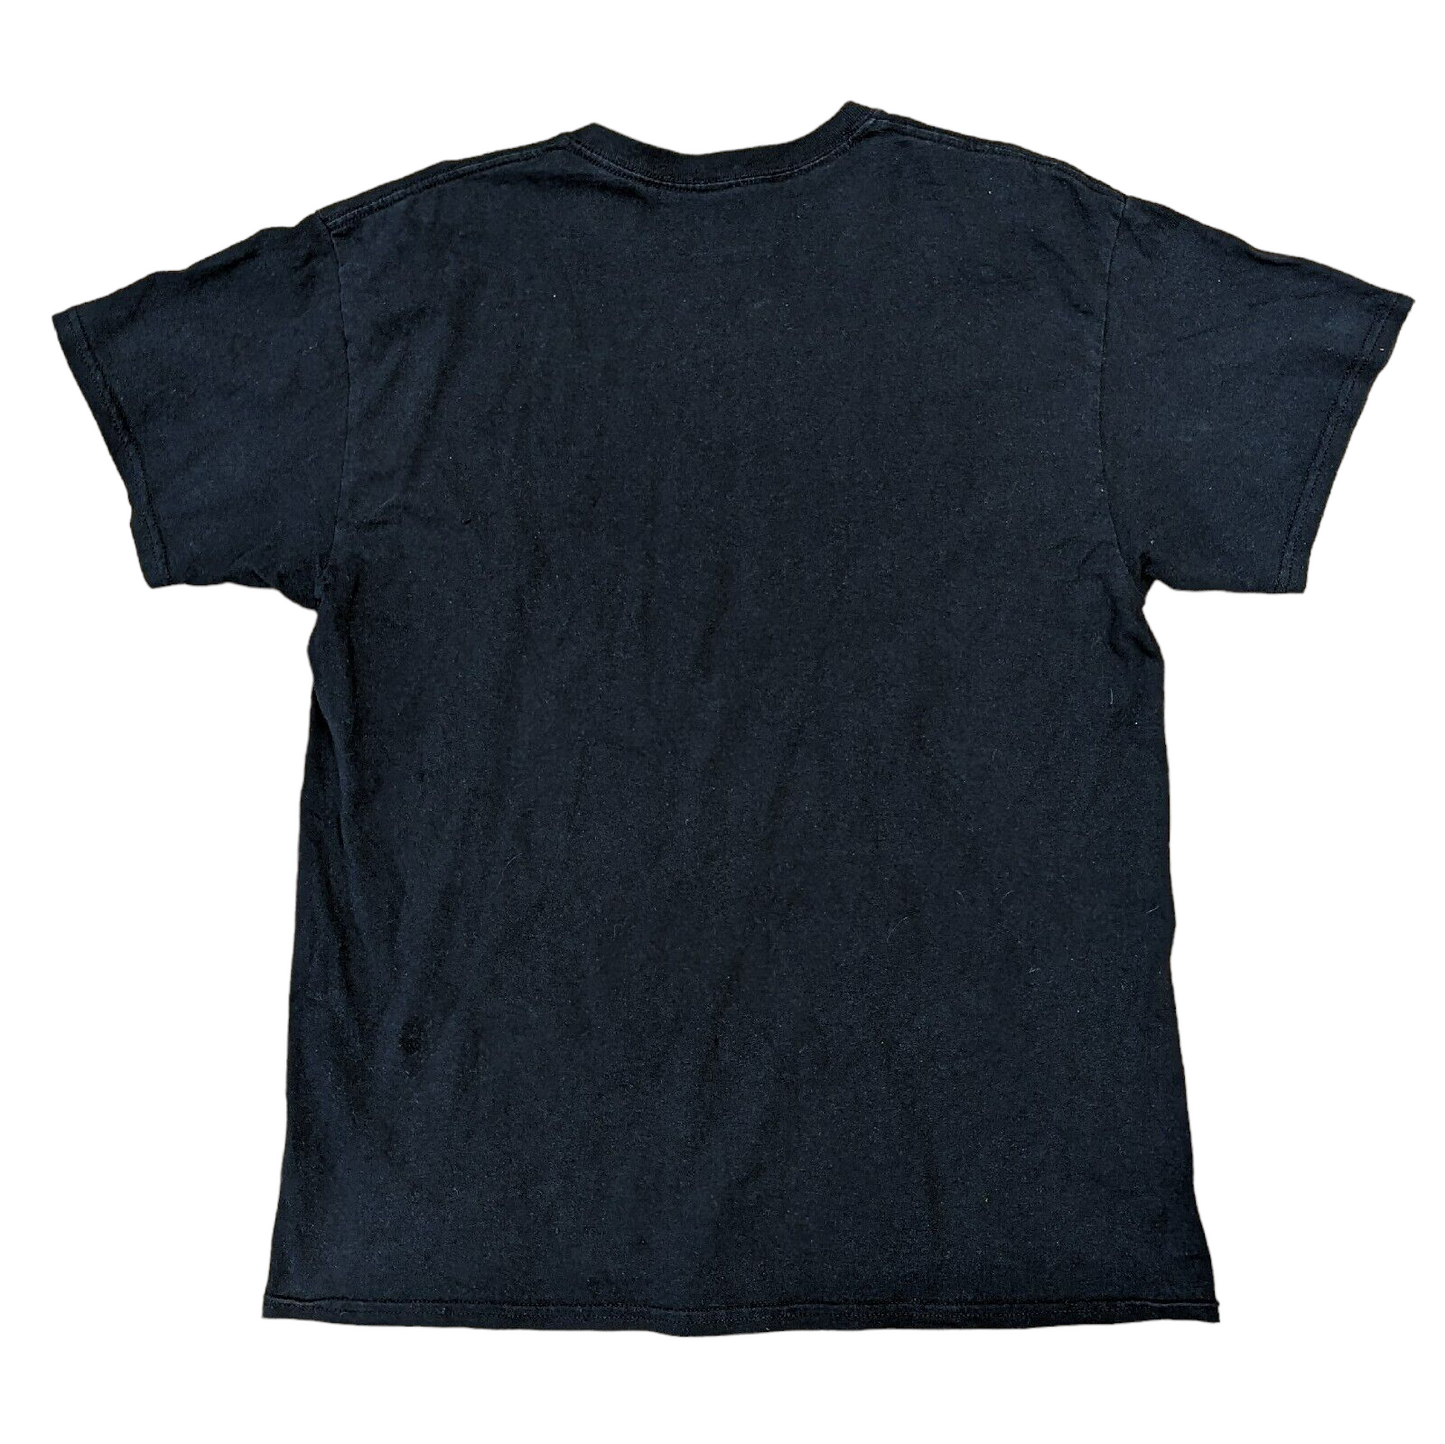 Exumer Scott Jackson T-Shirt Size L